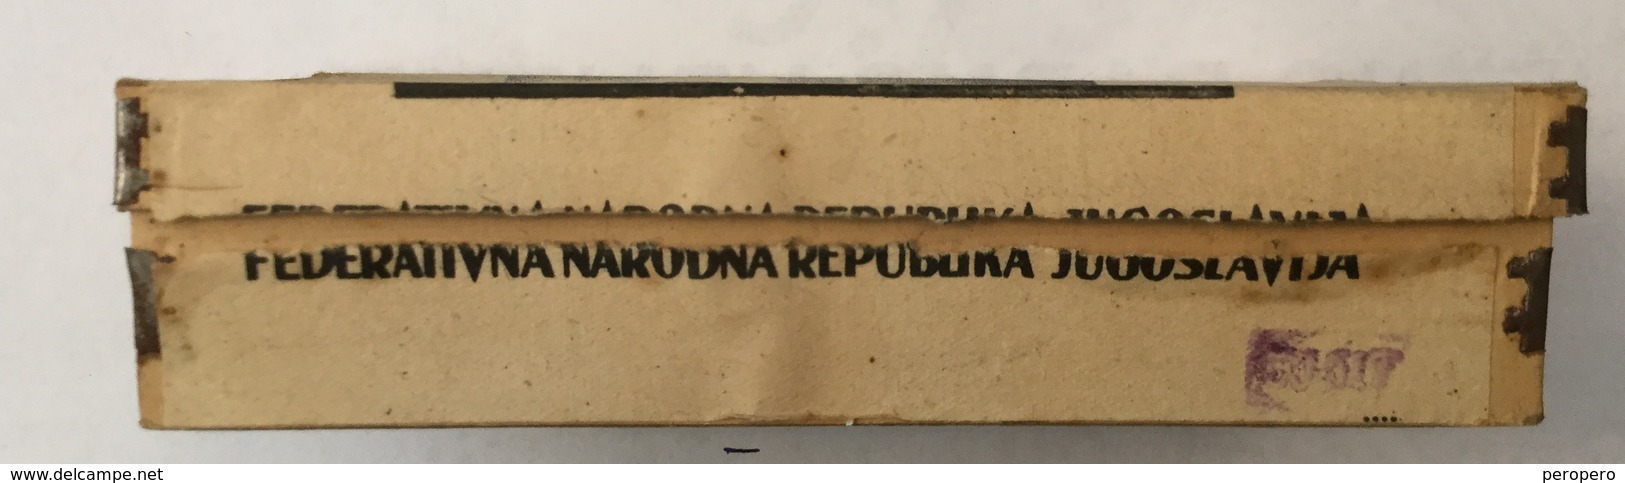 EMPTY  TOBACCO  BOX    SUTJESKA   100 CIGARETTES   FNRJ  YUGOSLAVIA - Boites à Tabac Vides